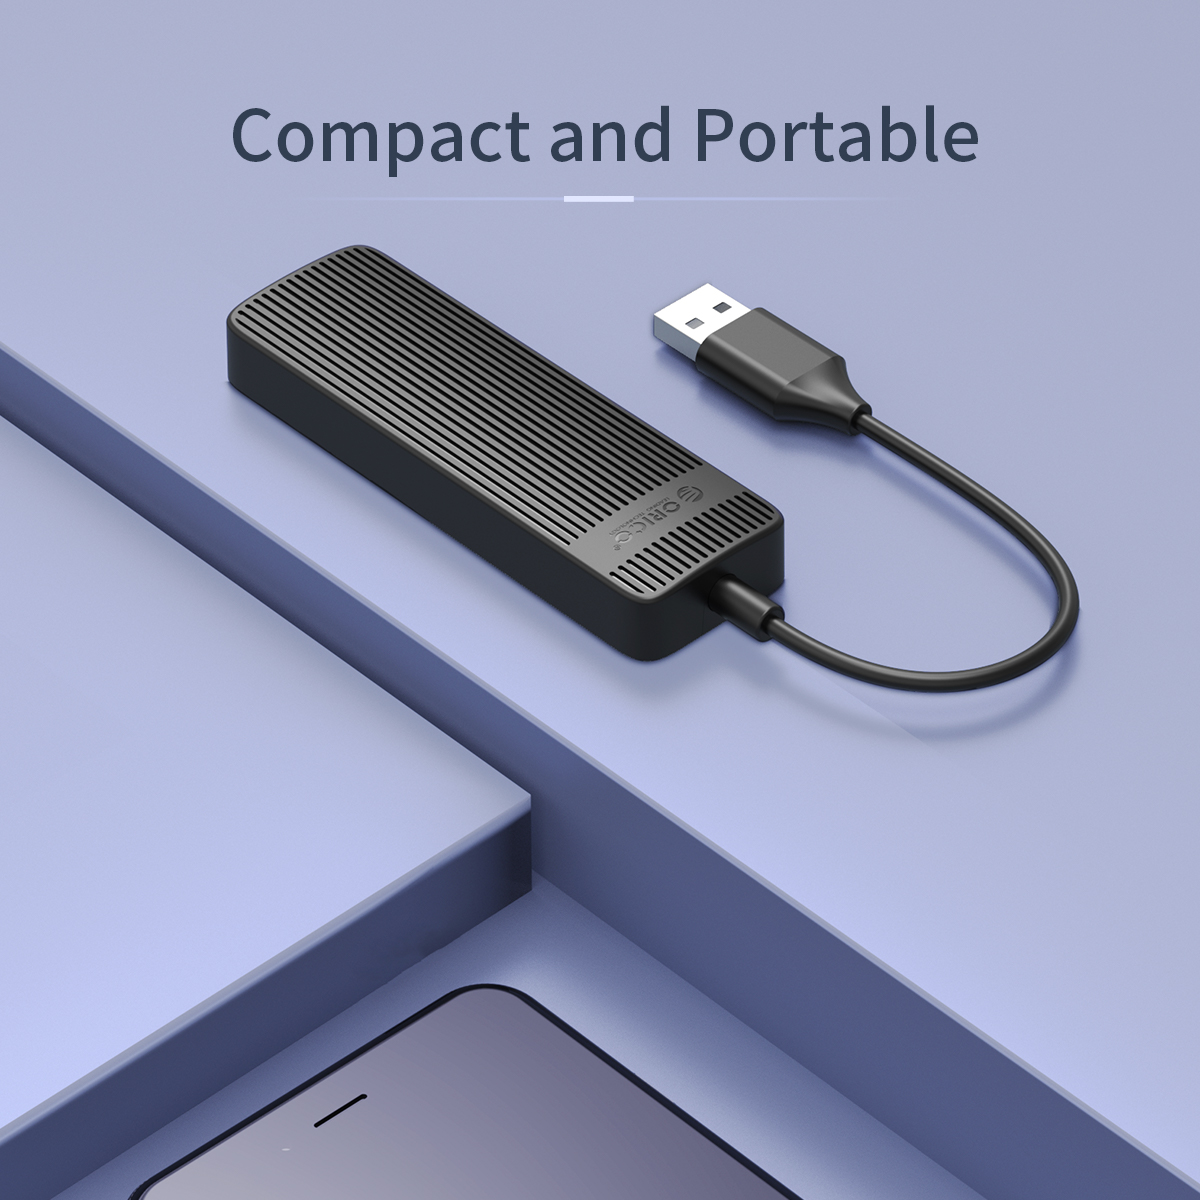 هاب USB  اوریکو FL02